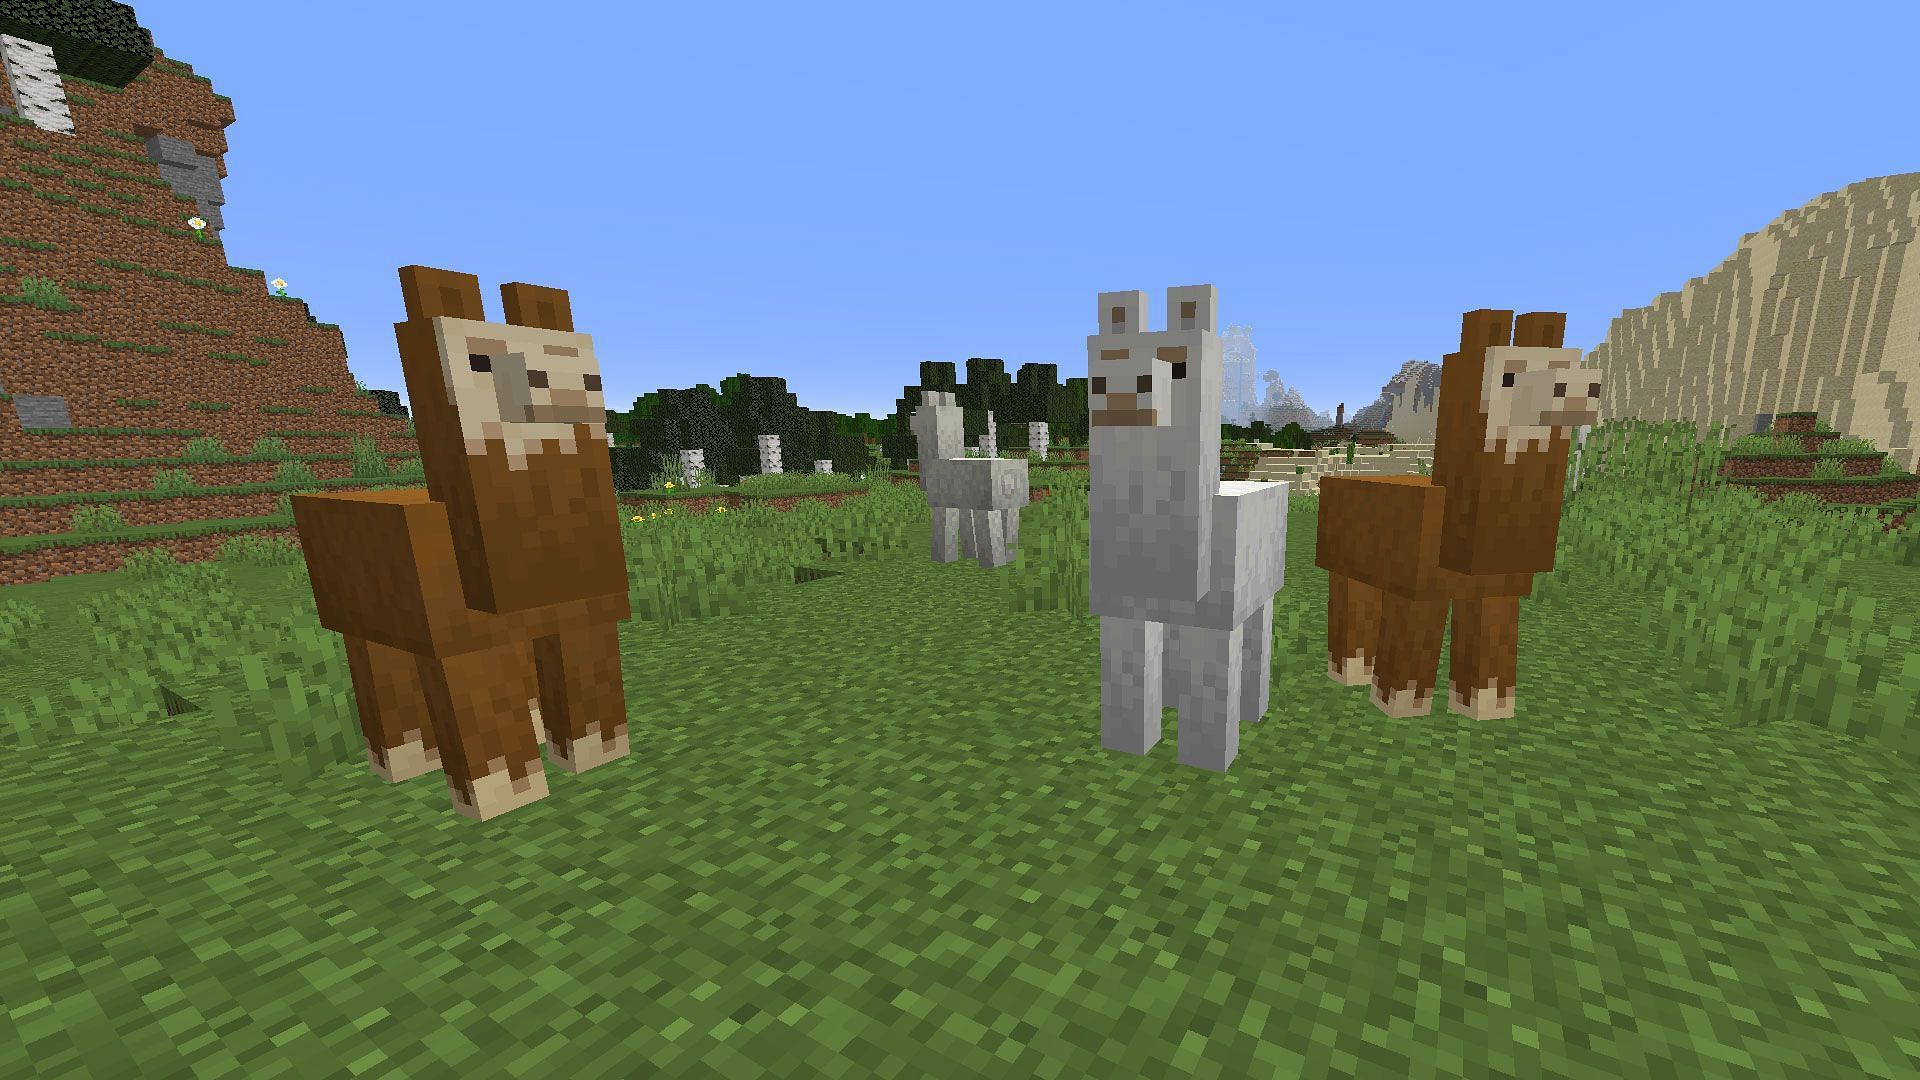 Llamas (Image via Minecraft)